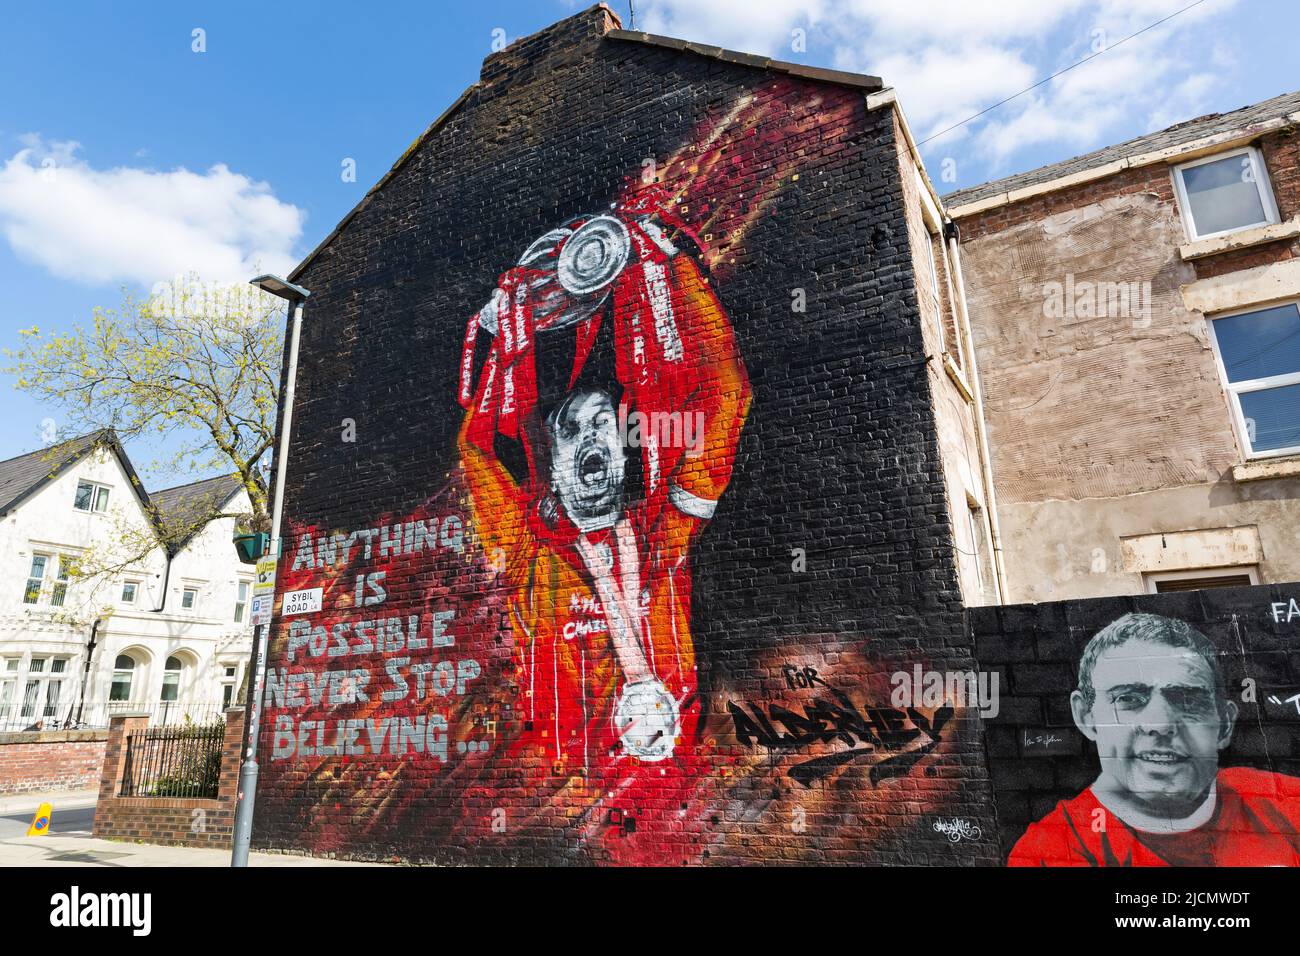 Mural of Jordan Henderson holding Premier League trophy, Liverpool FC street art, Sybil Road, Anfield, Liverpool, England, UK Stock Photo